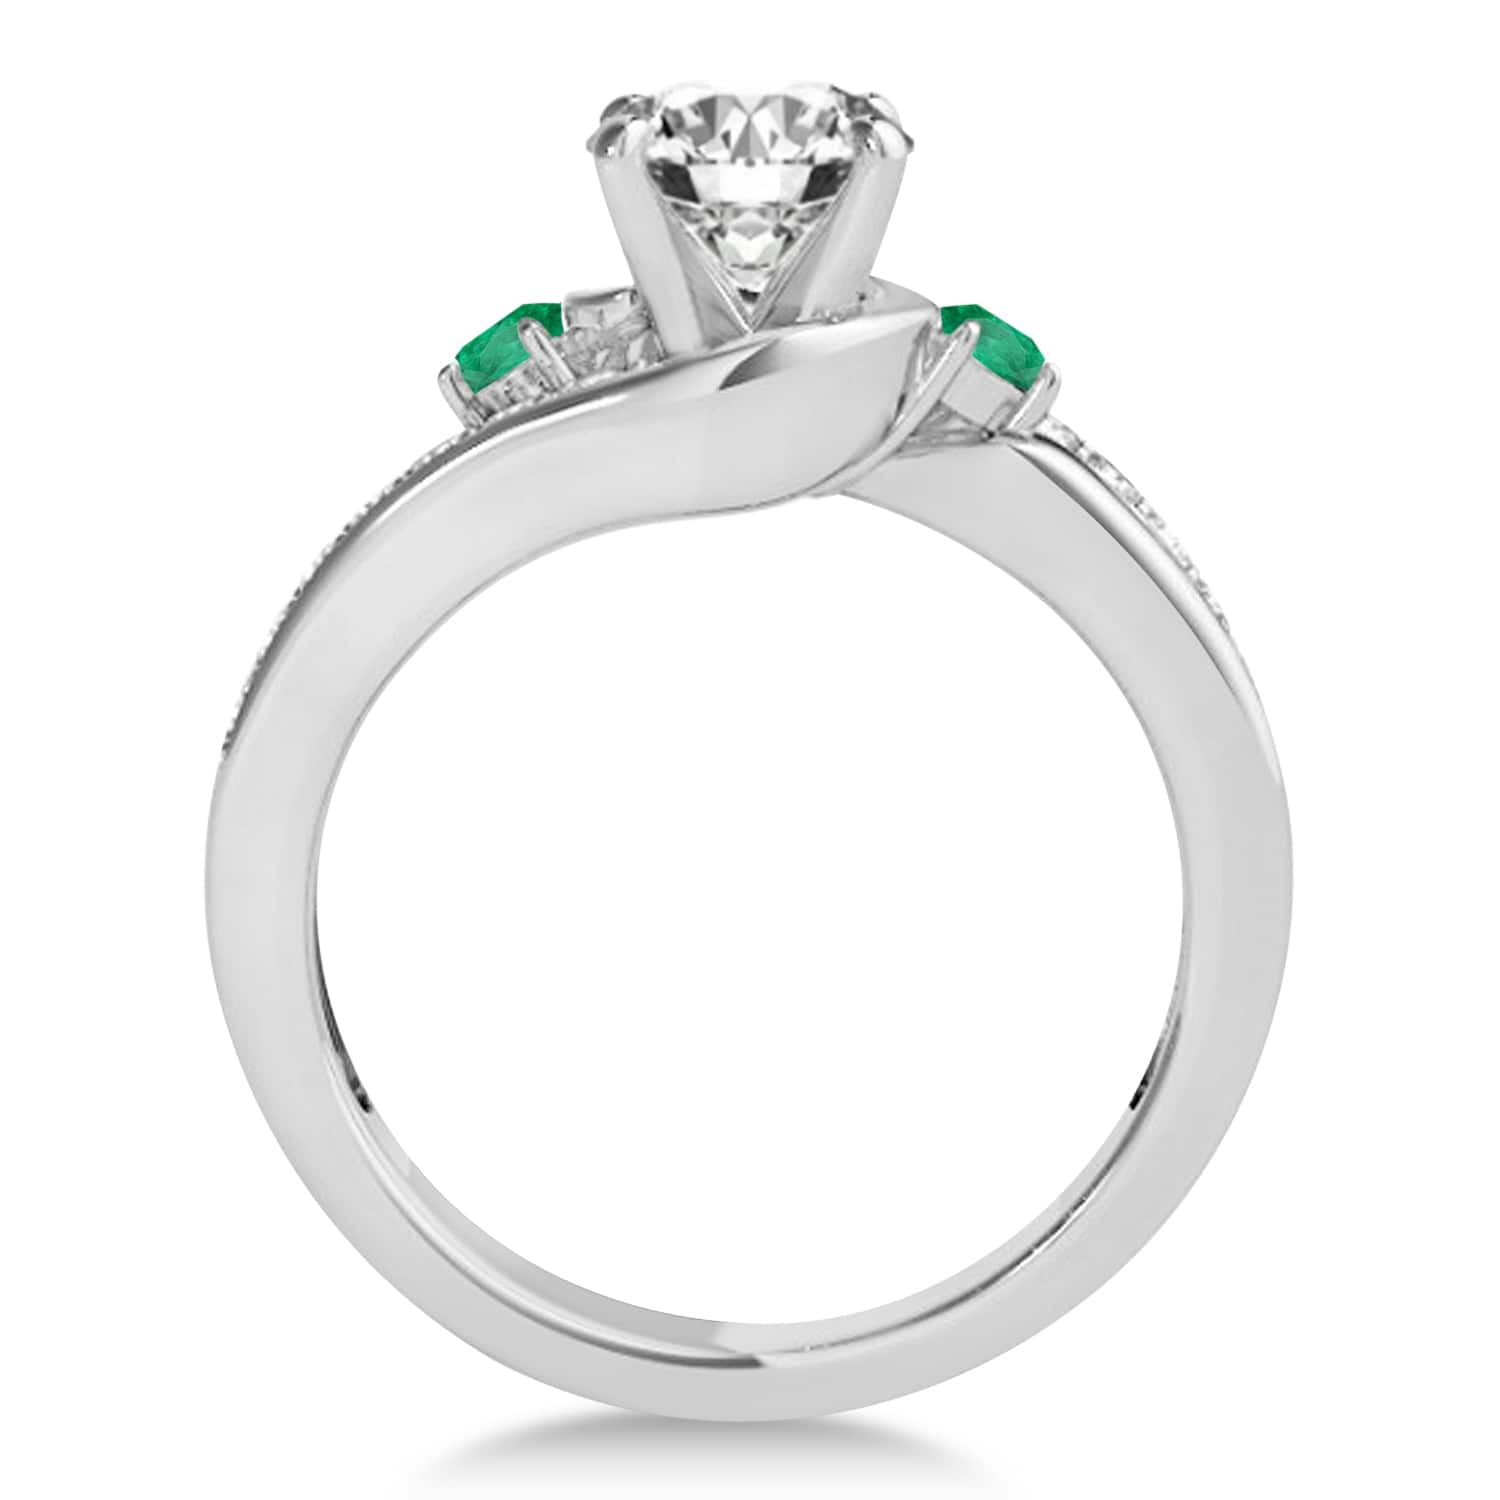 Swirl Design Emerald & Diamond Engagement Ring Setting Platinum 0.38ct